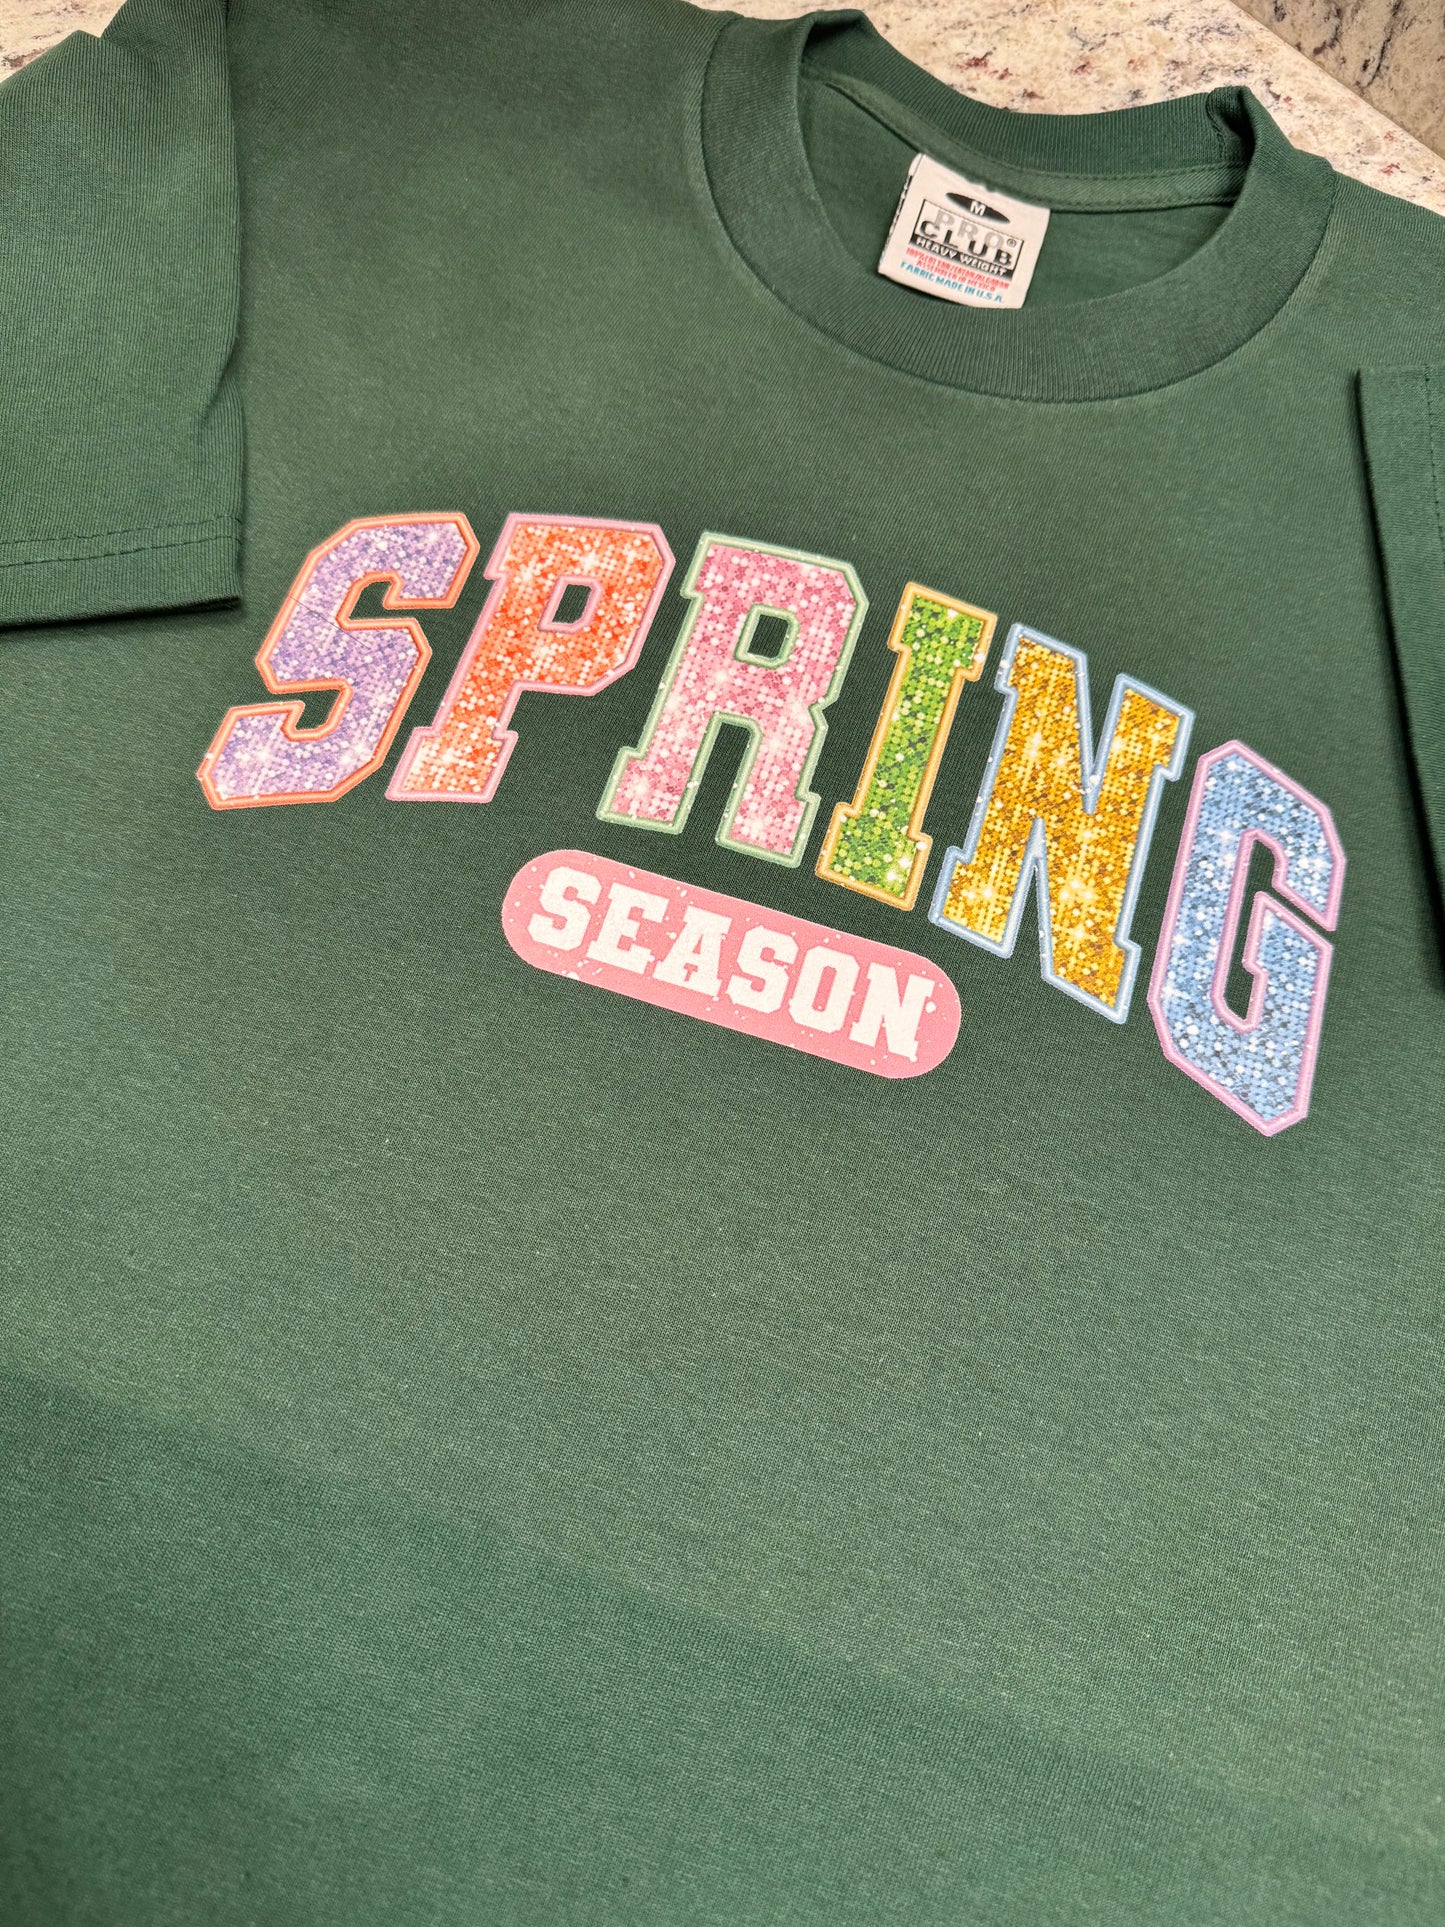 Graphic t-shirt spring season